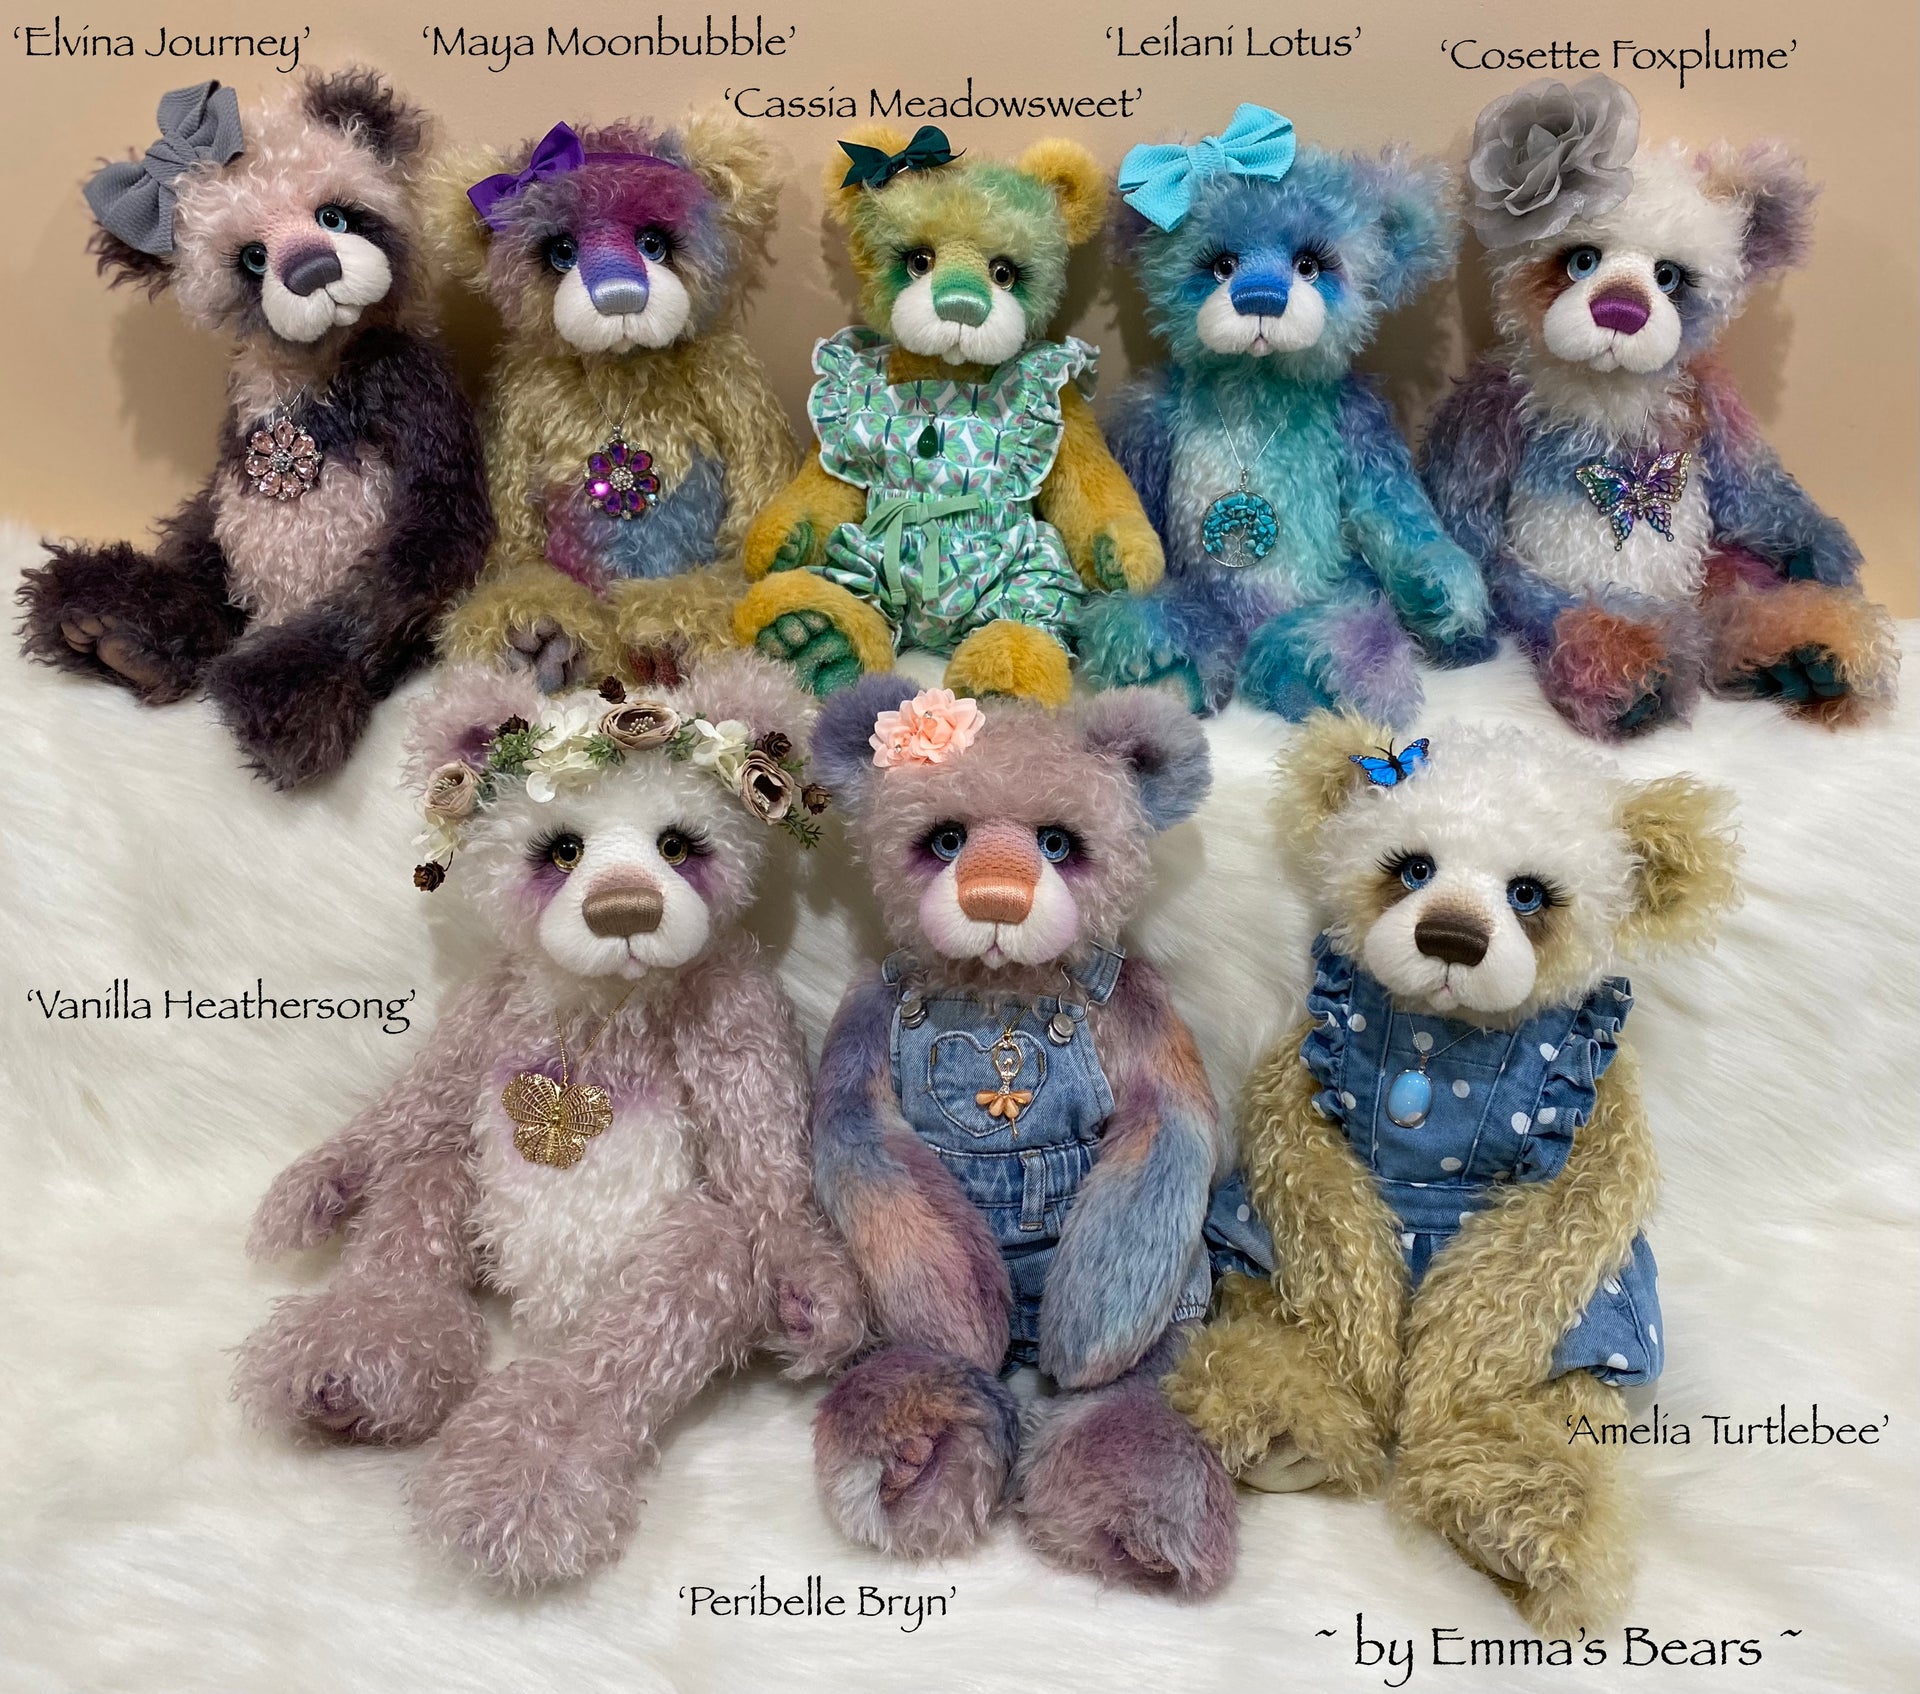 Cosette Foxplume - 18" Hand-Dyed Mohair Artist Bear by Emma's Bears - OOAK